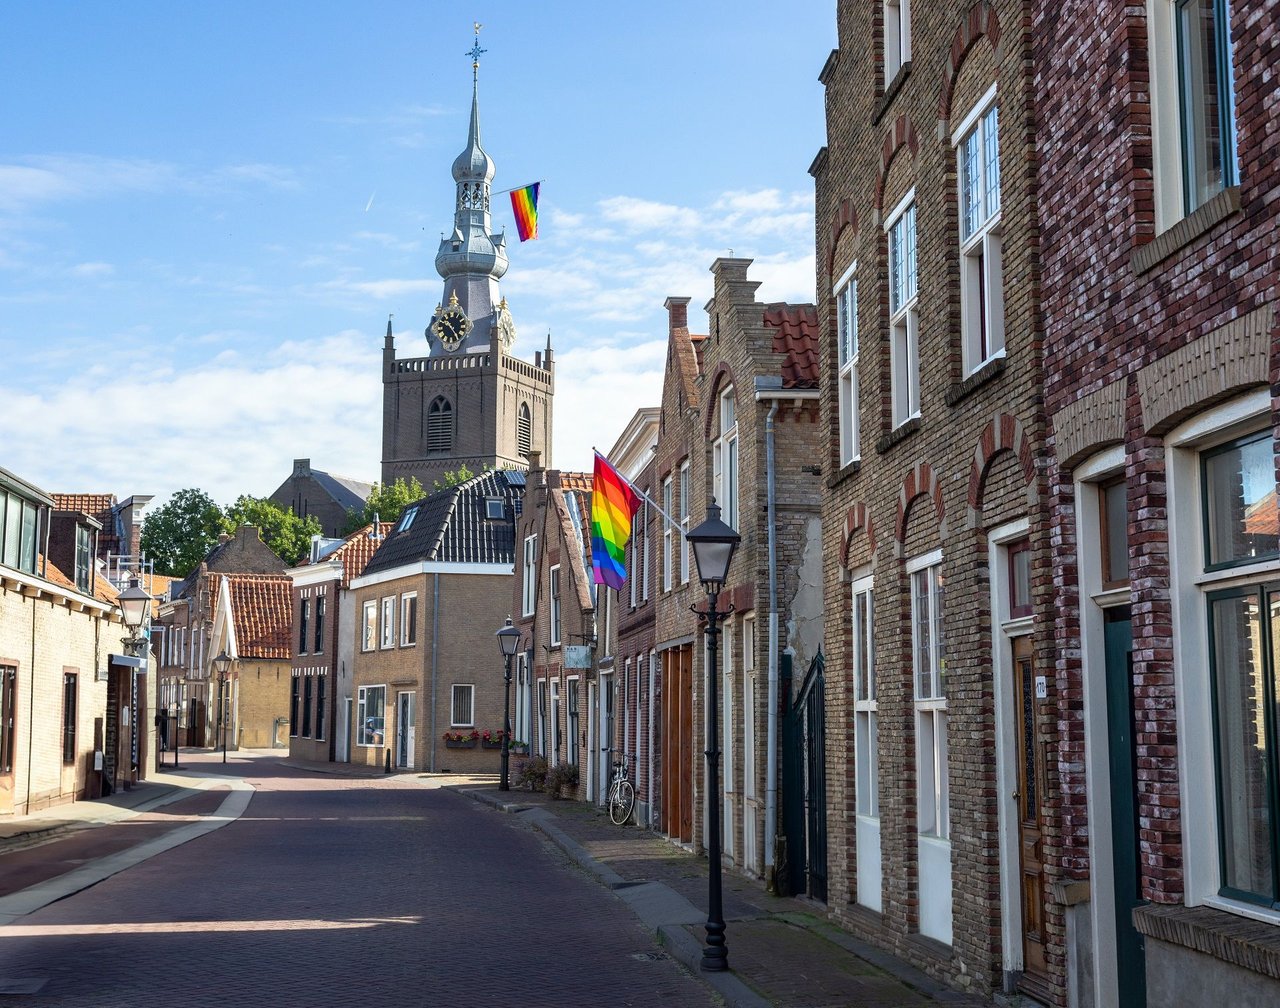 Typical Dutch street! A little modified